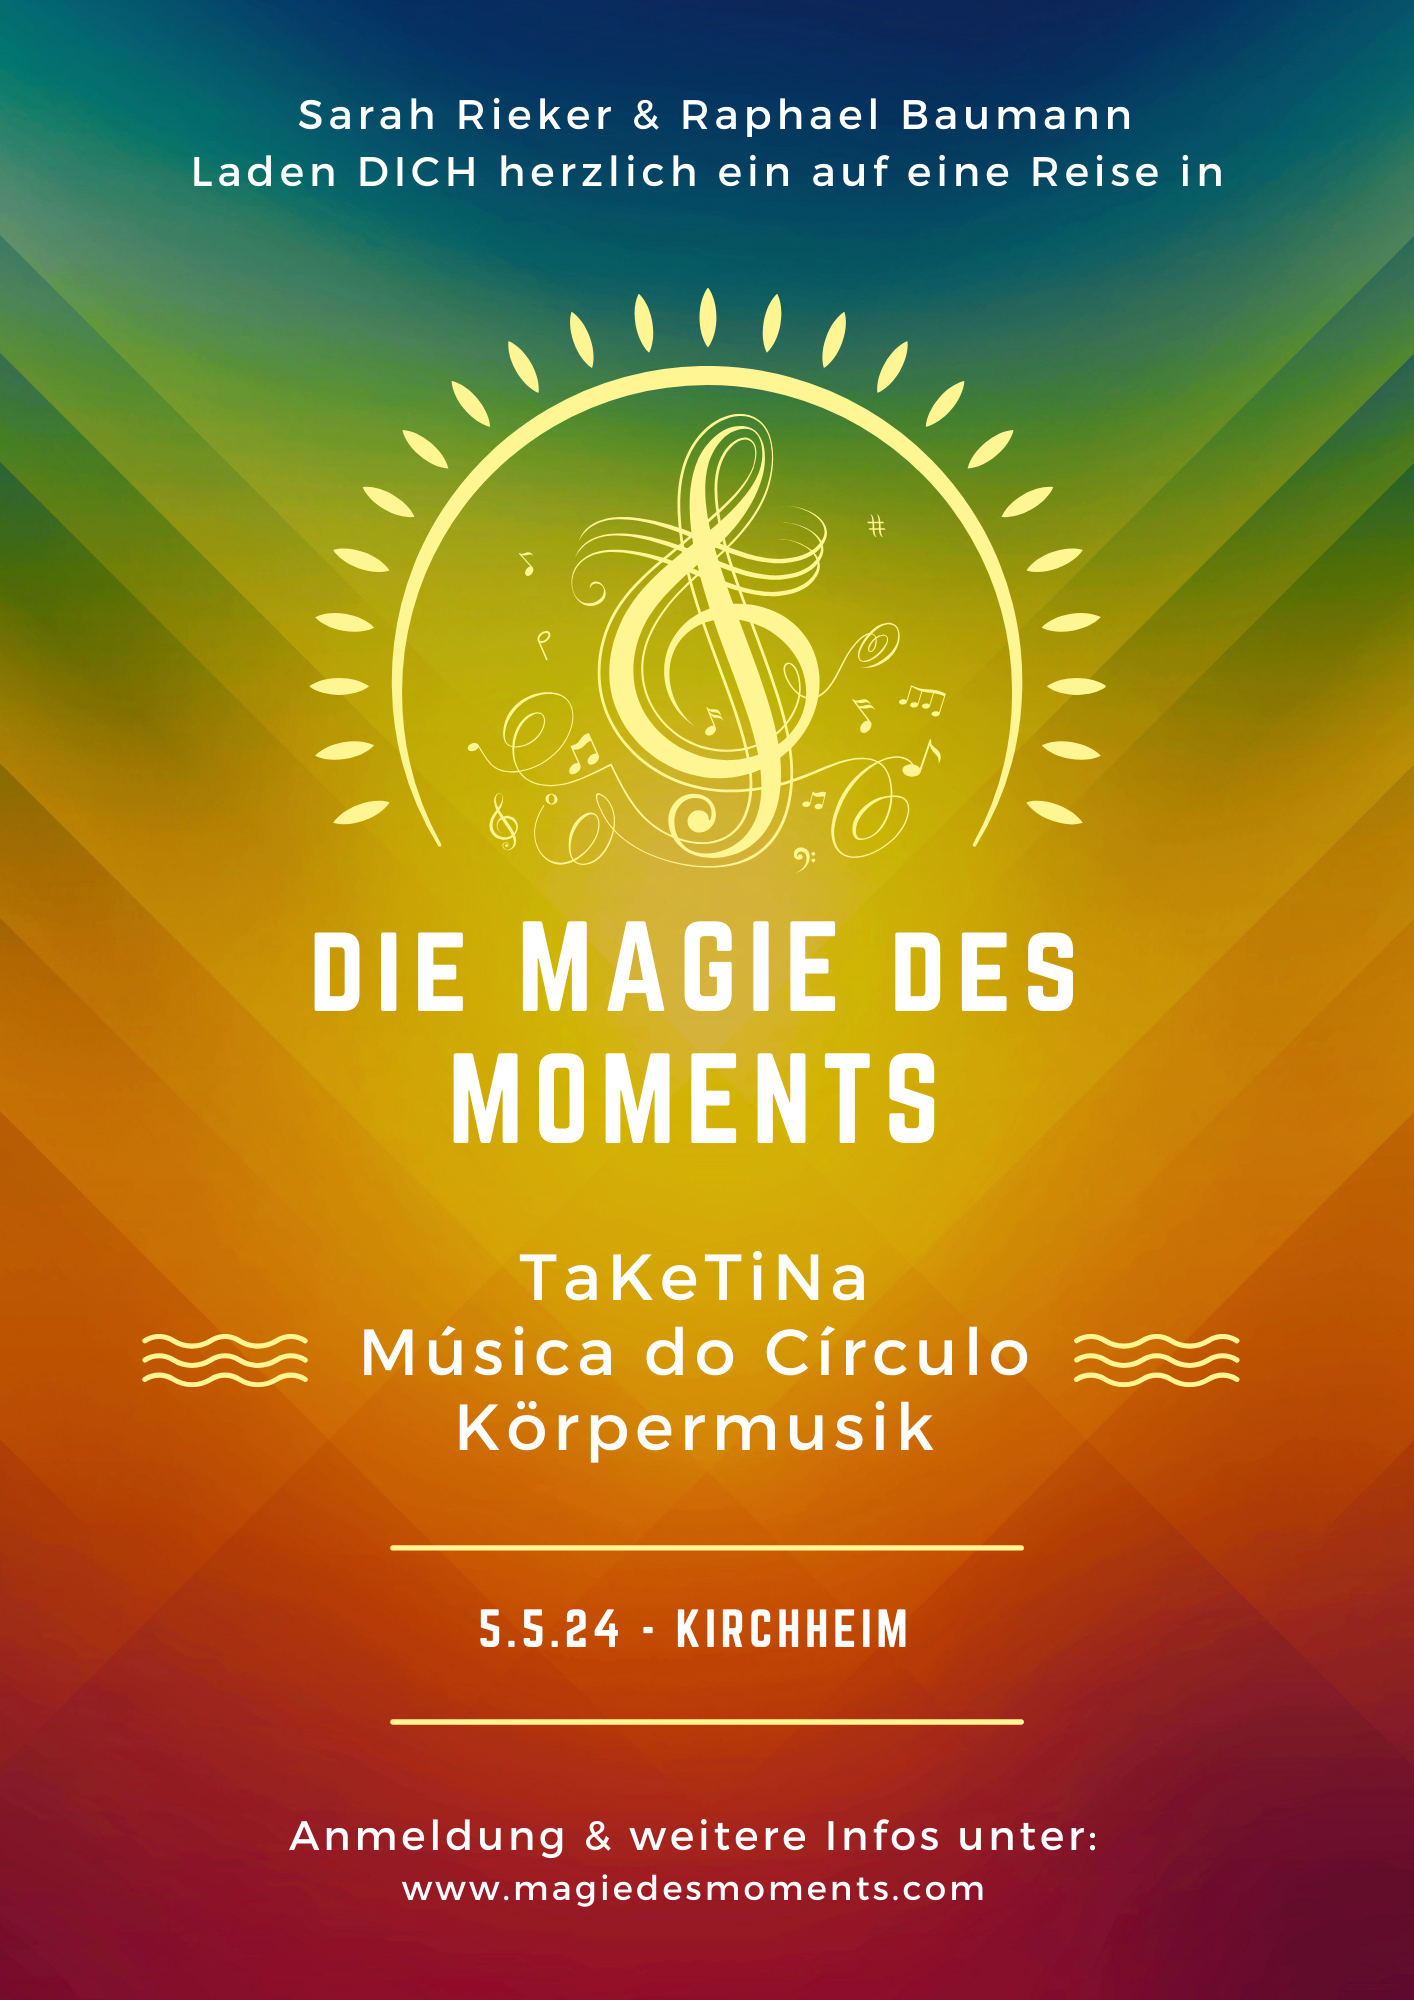 Magie des Moments - 5.5.24 in Kirchheim